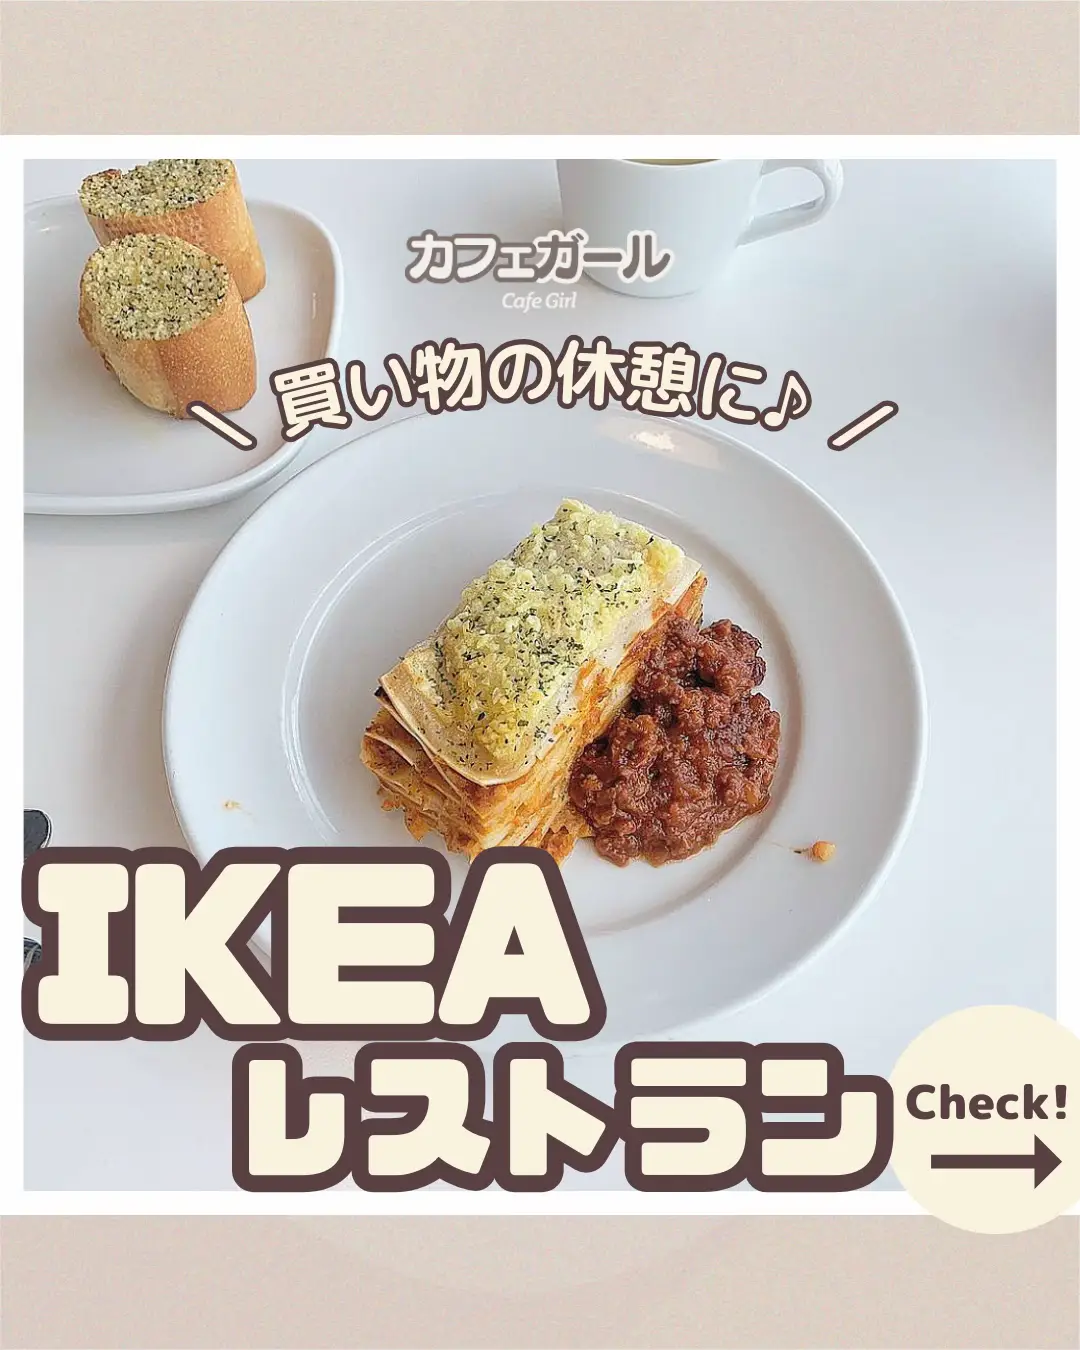 Ikeaフード - Lemon8検索